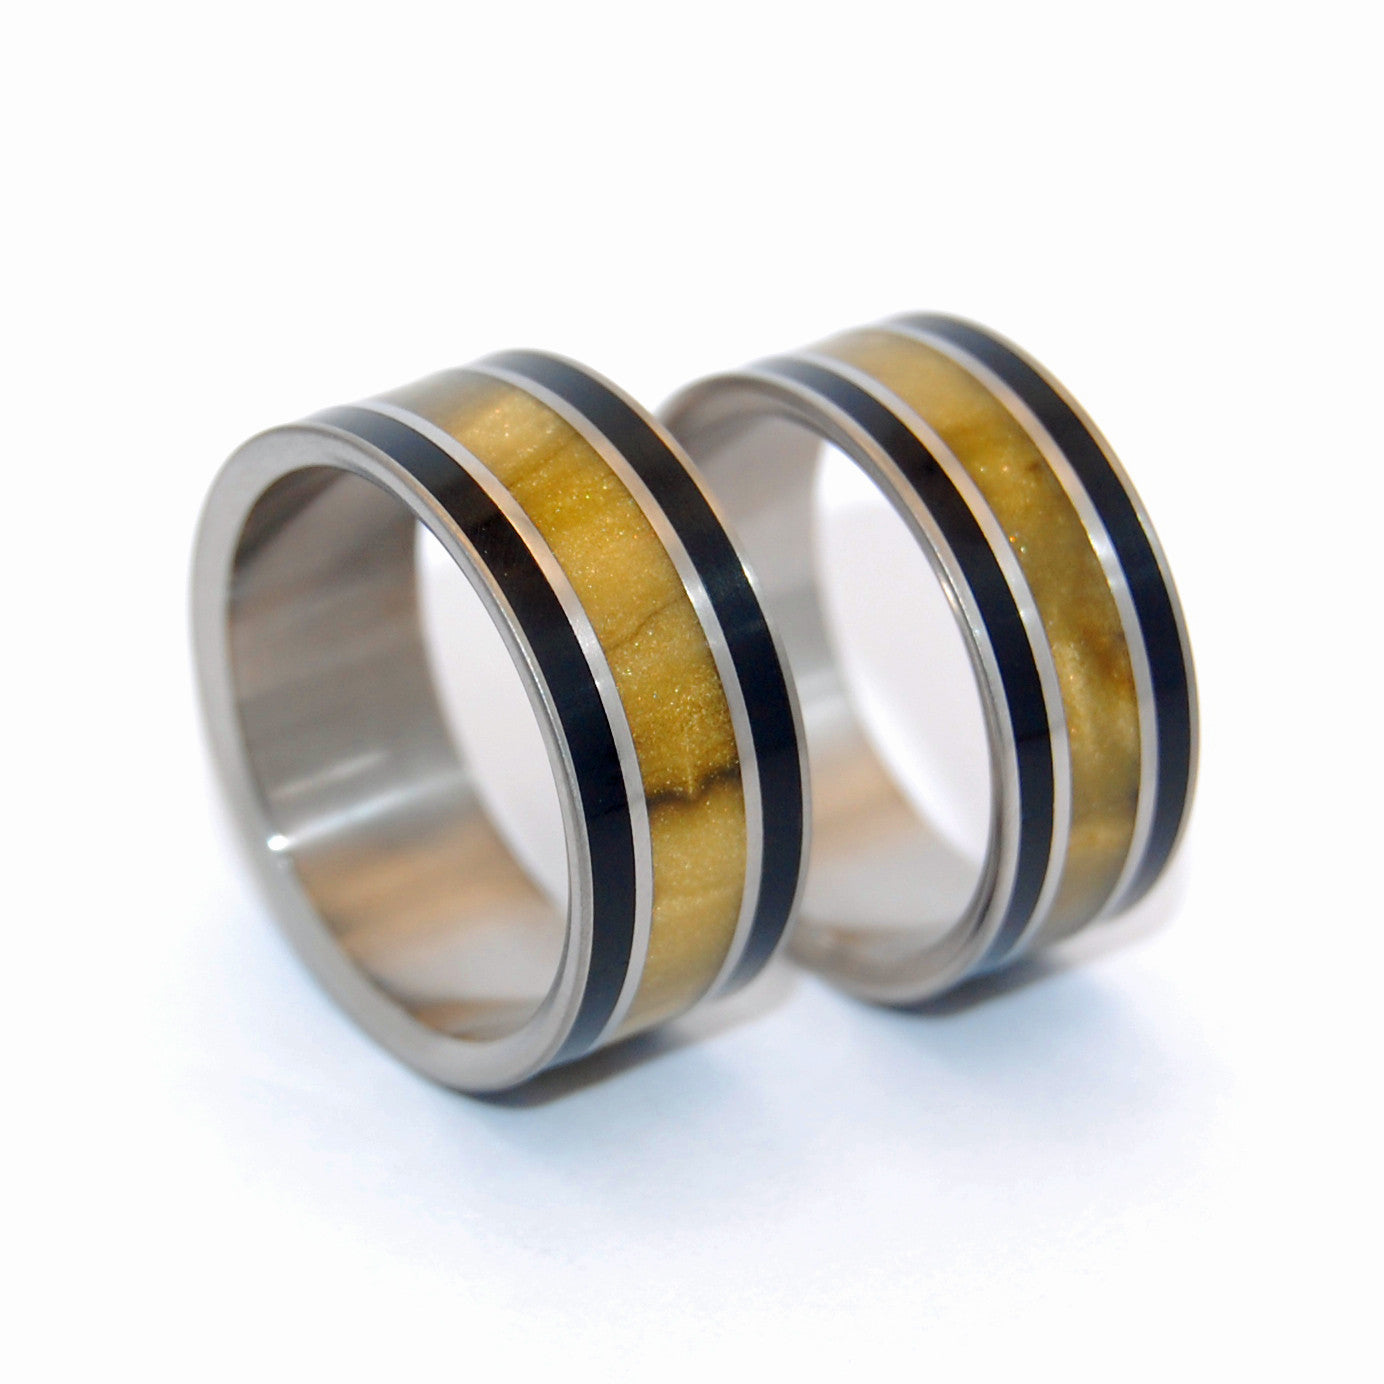 OUR SUMMIT | Tiger Eye Stone & Onyx Stone - Unique Titanium Wedding Rings Set - Minter and Richter Designs